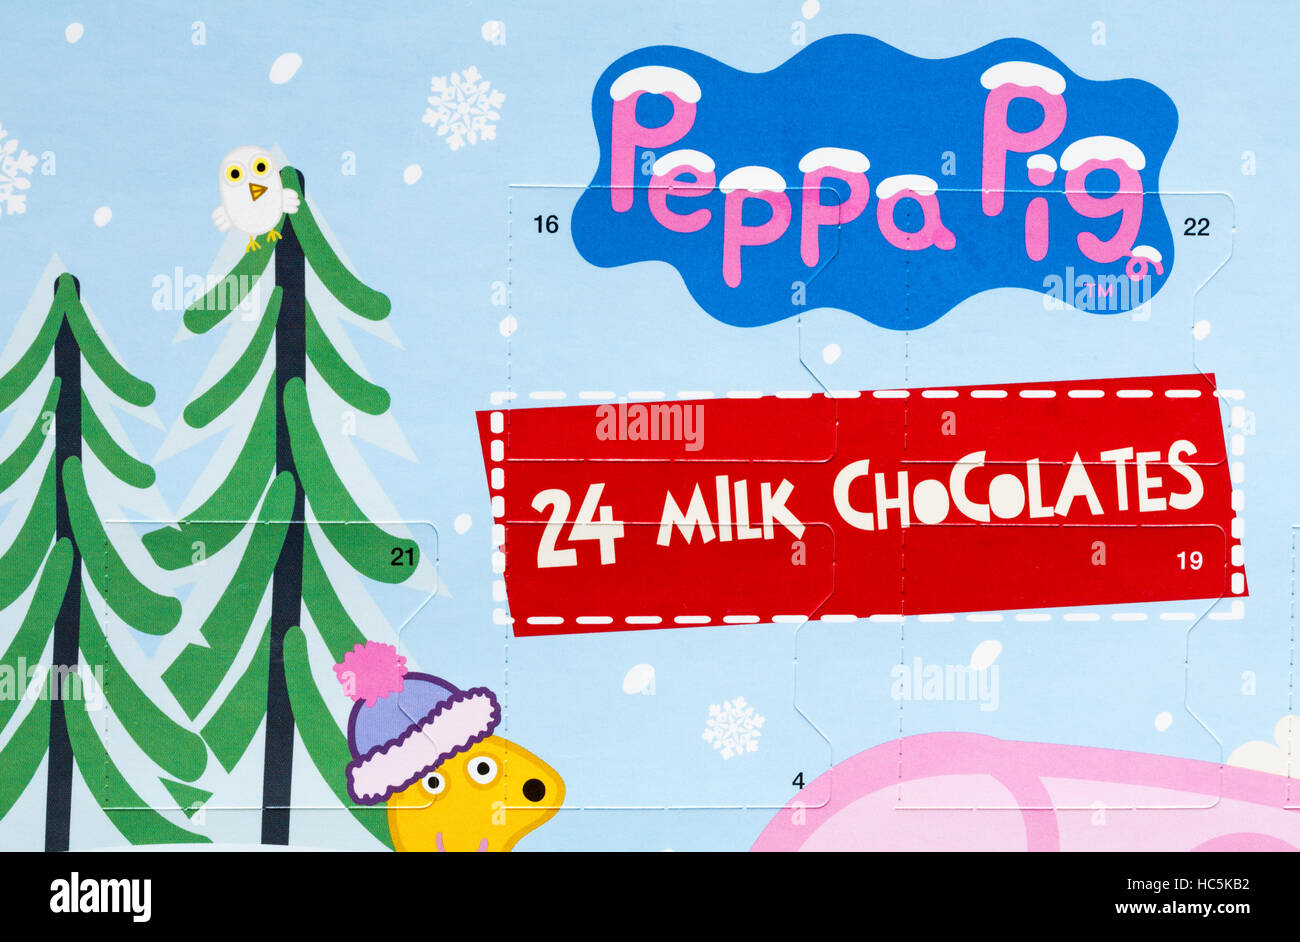 Detail of Kinnerton milk chocolate Peppa Pig advent calendar